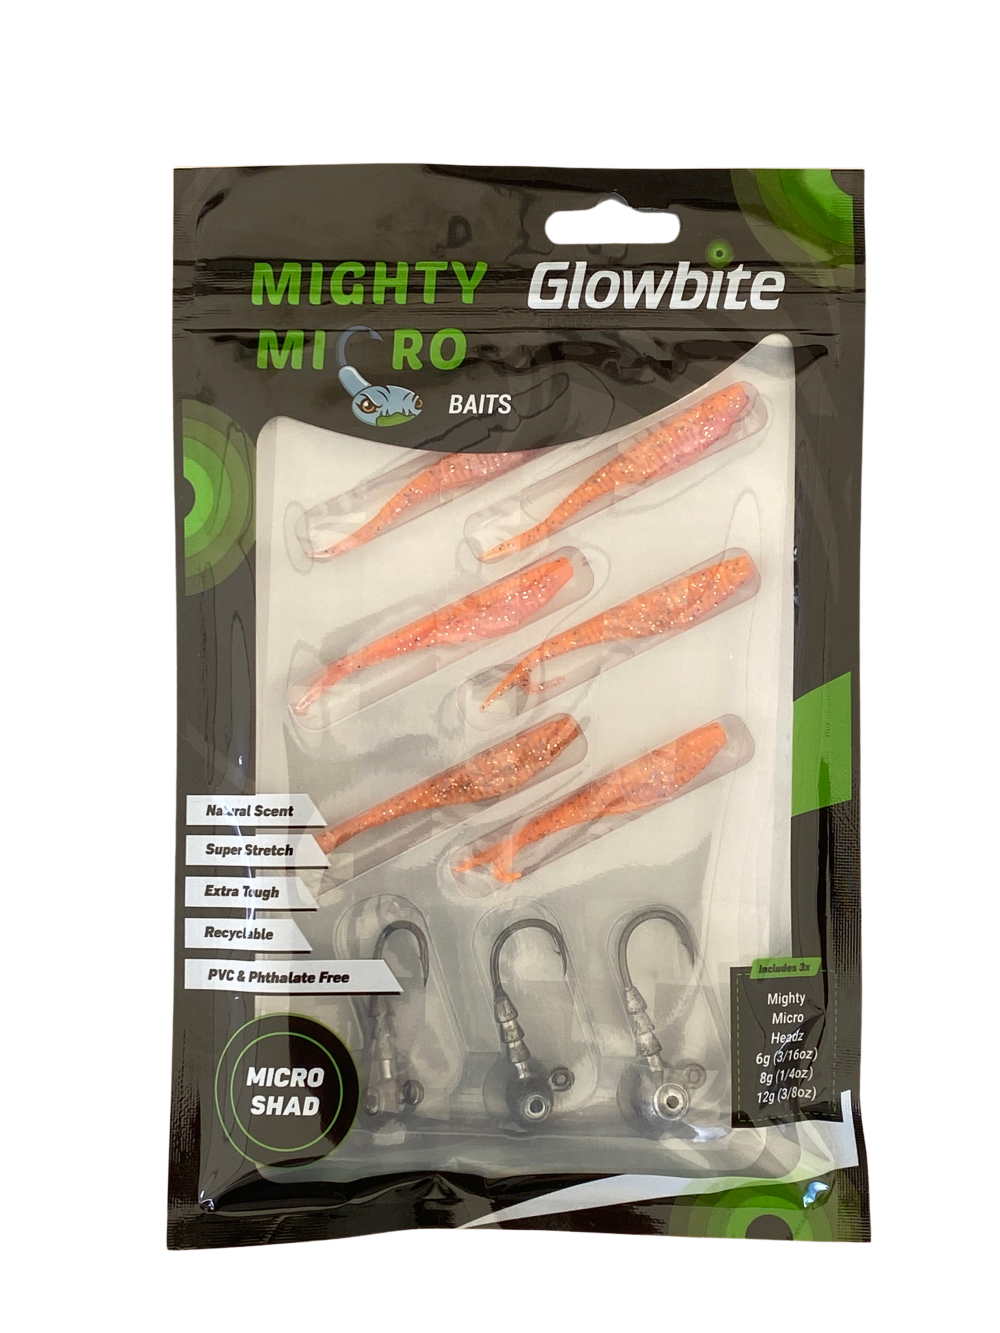 Glowbite Mighty Micro Bait - Micro Shad - Orange UV Glow